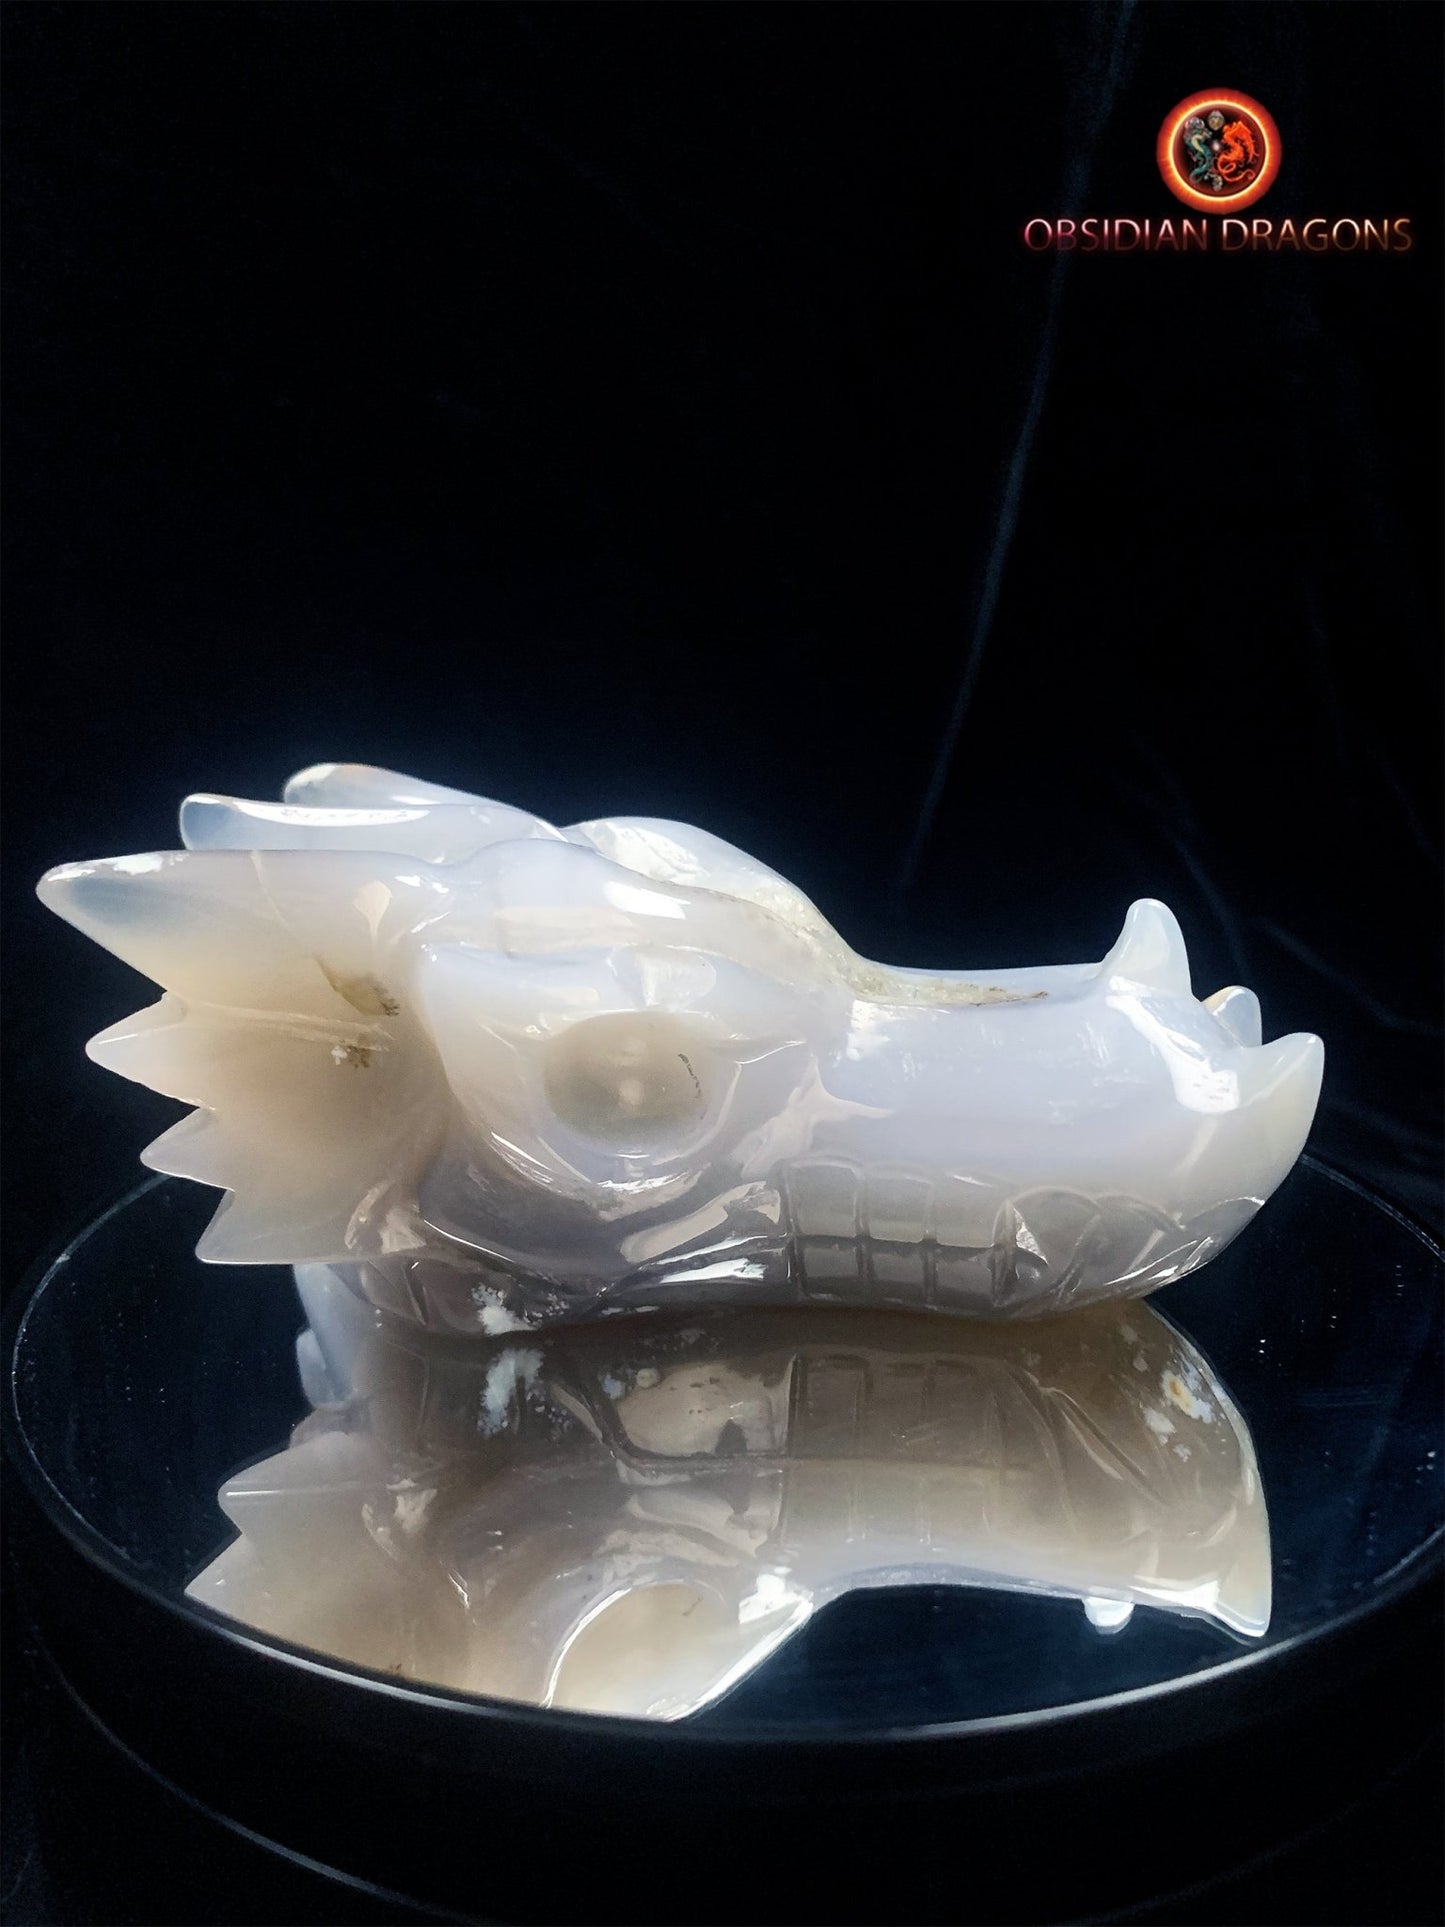 Crâne de dragon- Geode de quartz- méditation - obsidian dragons